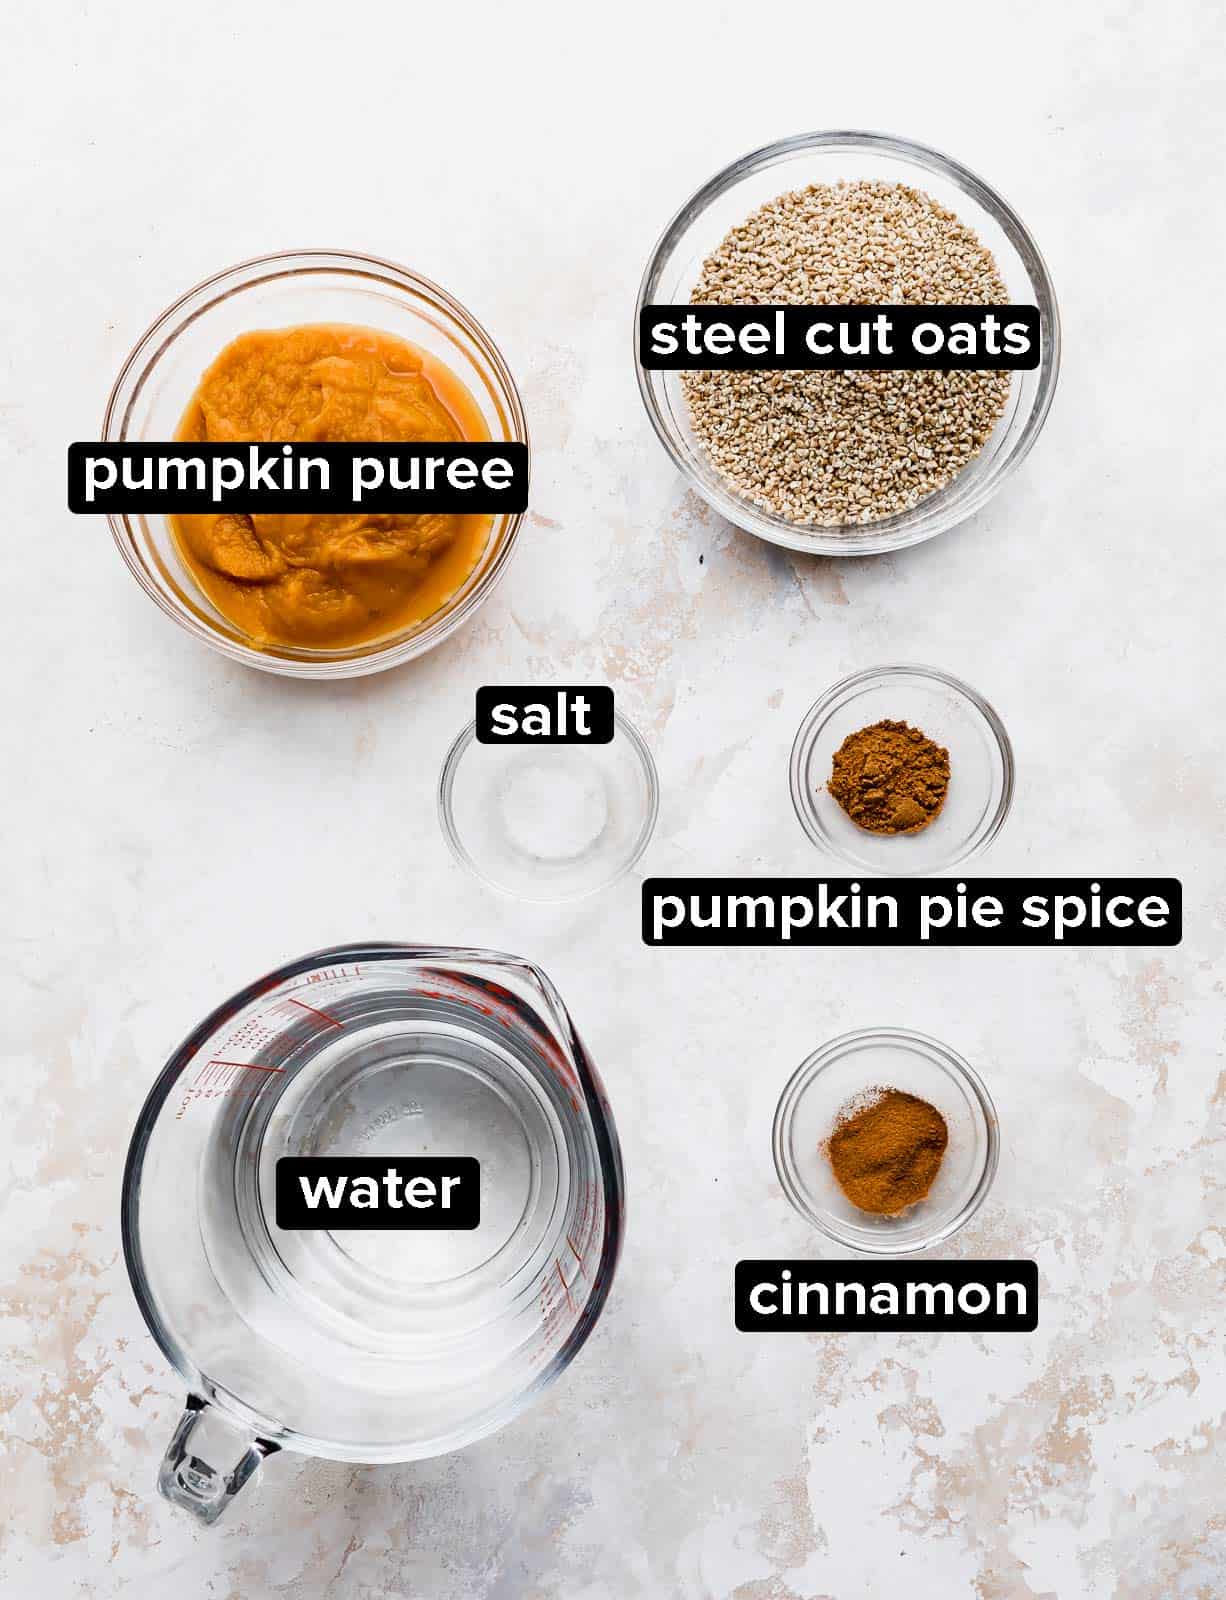 Pumpkin Steel Cut Oats ingredients on a textured white background.